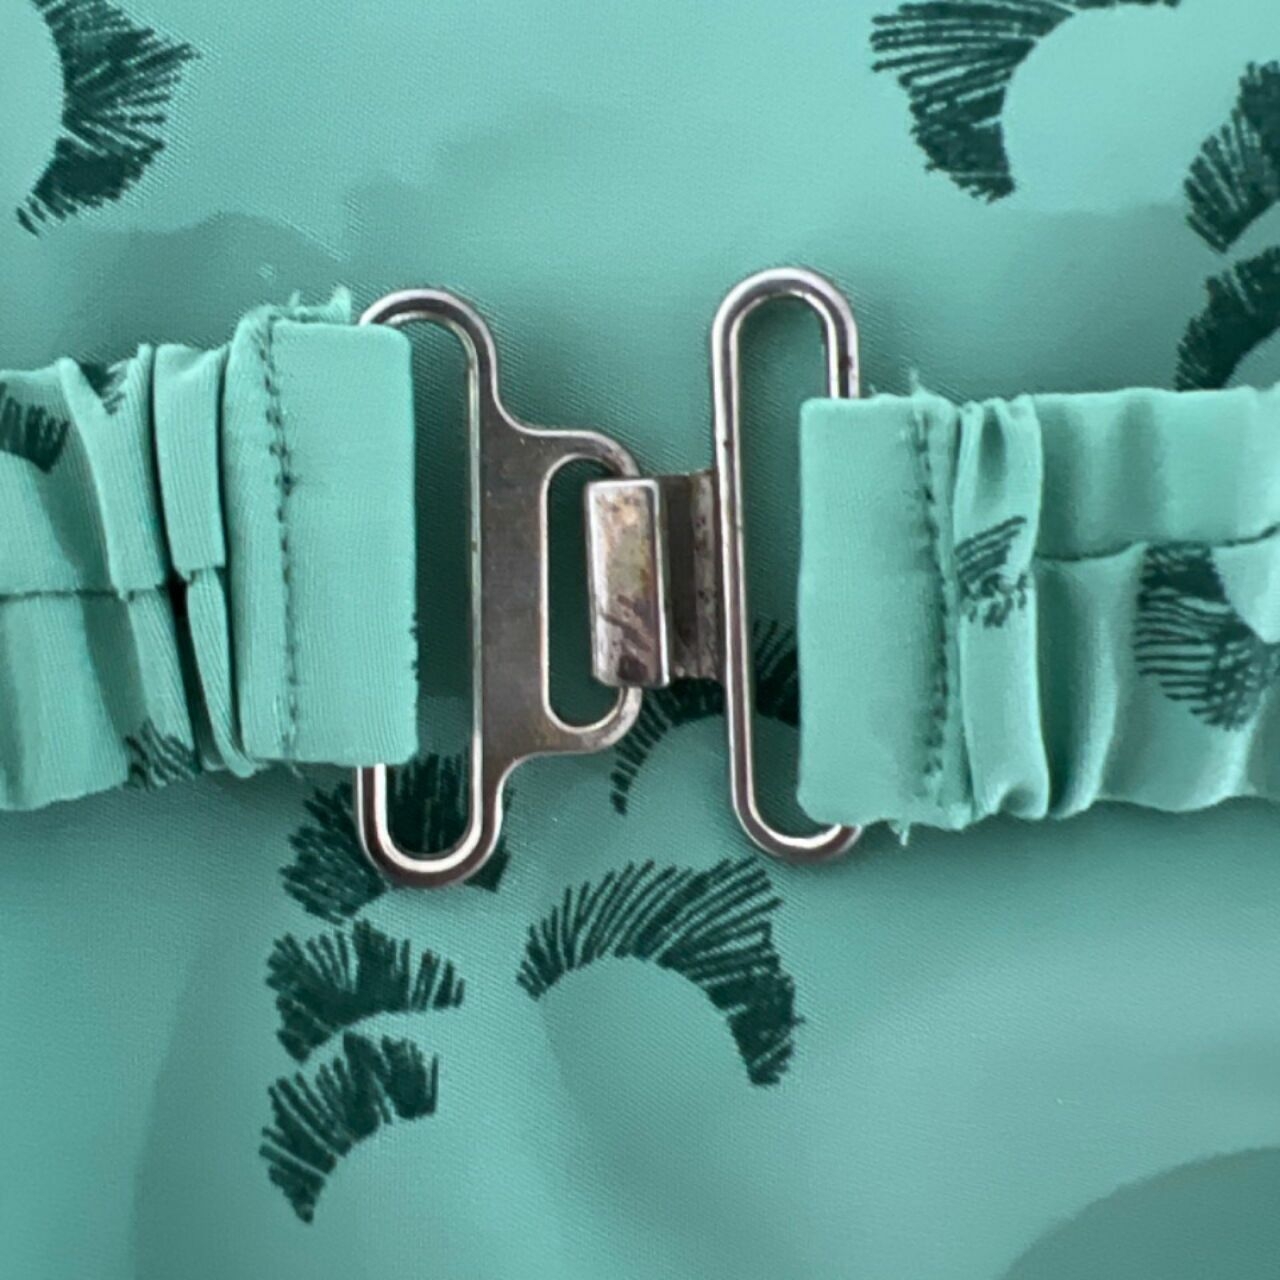 H&M Green Blouse with Detachable Belt